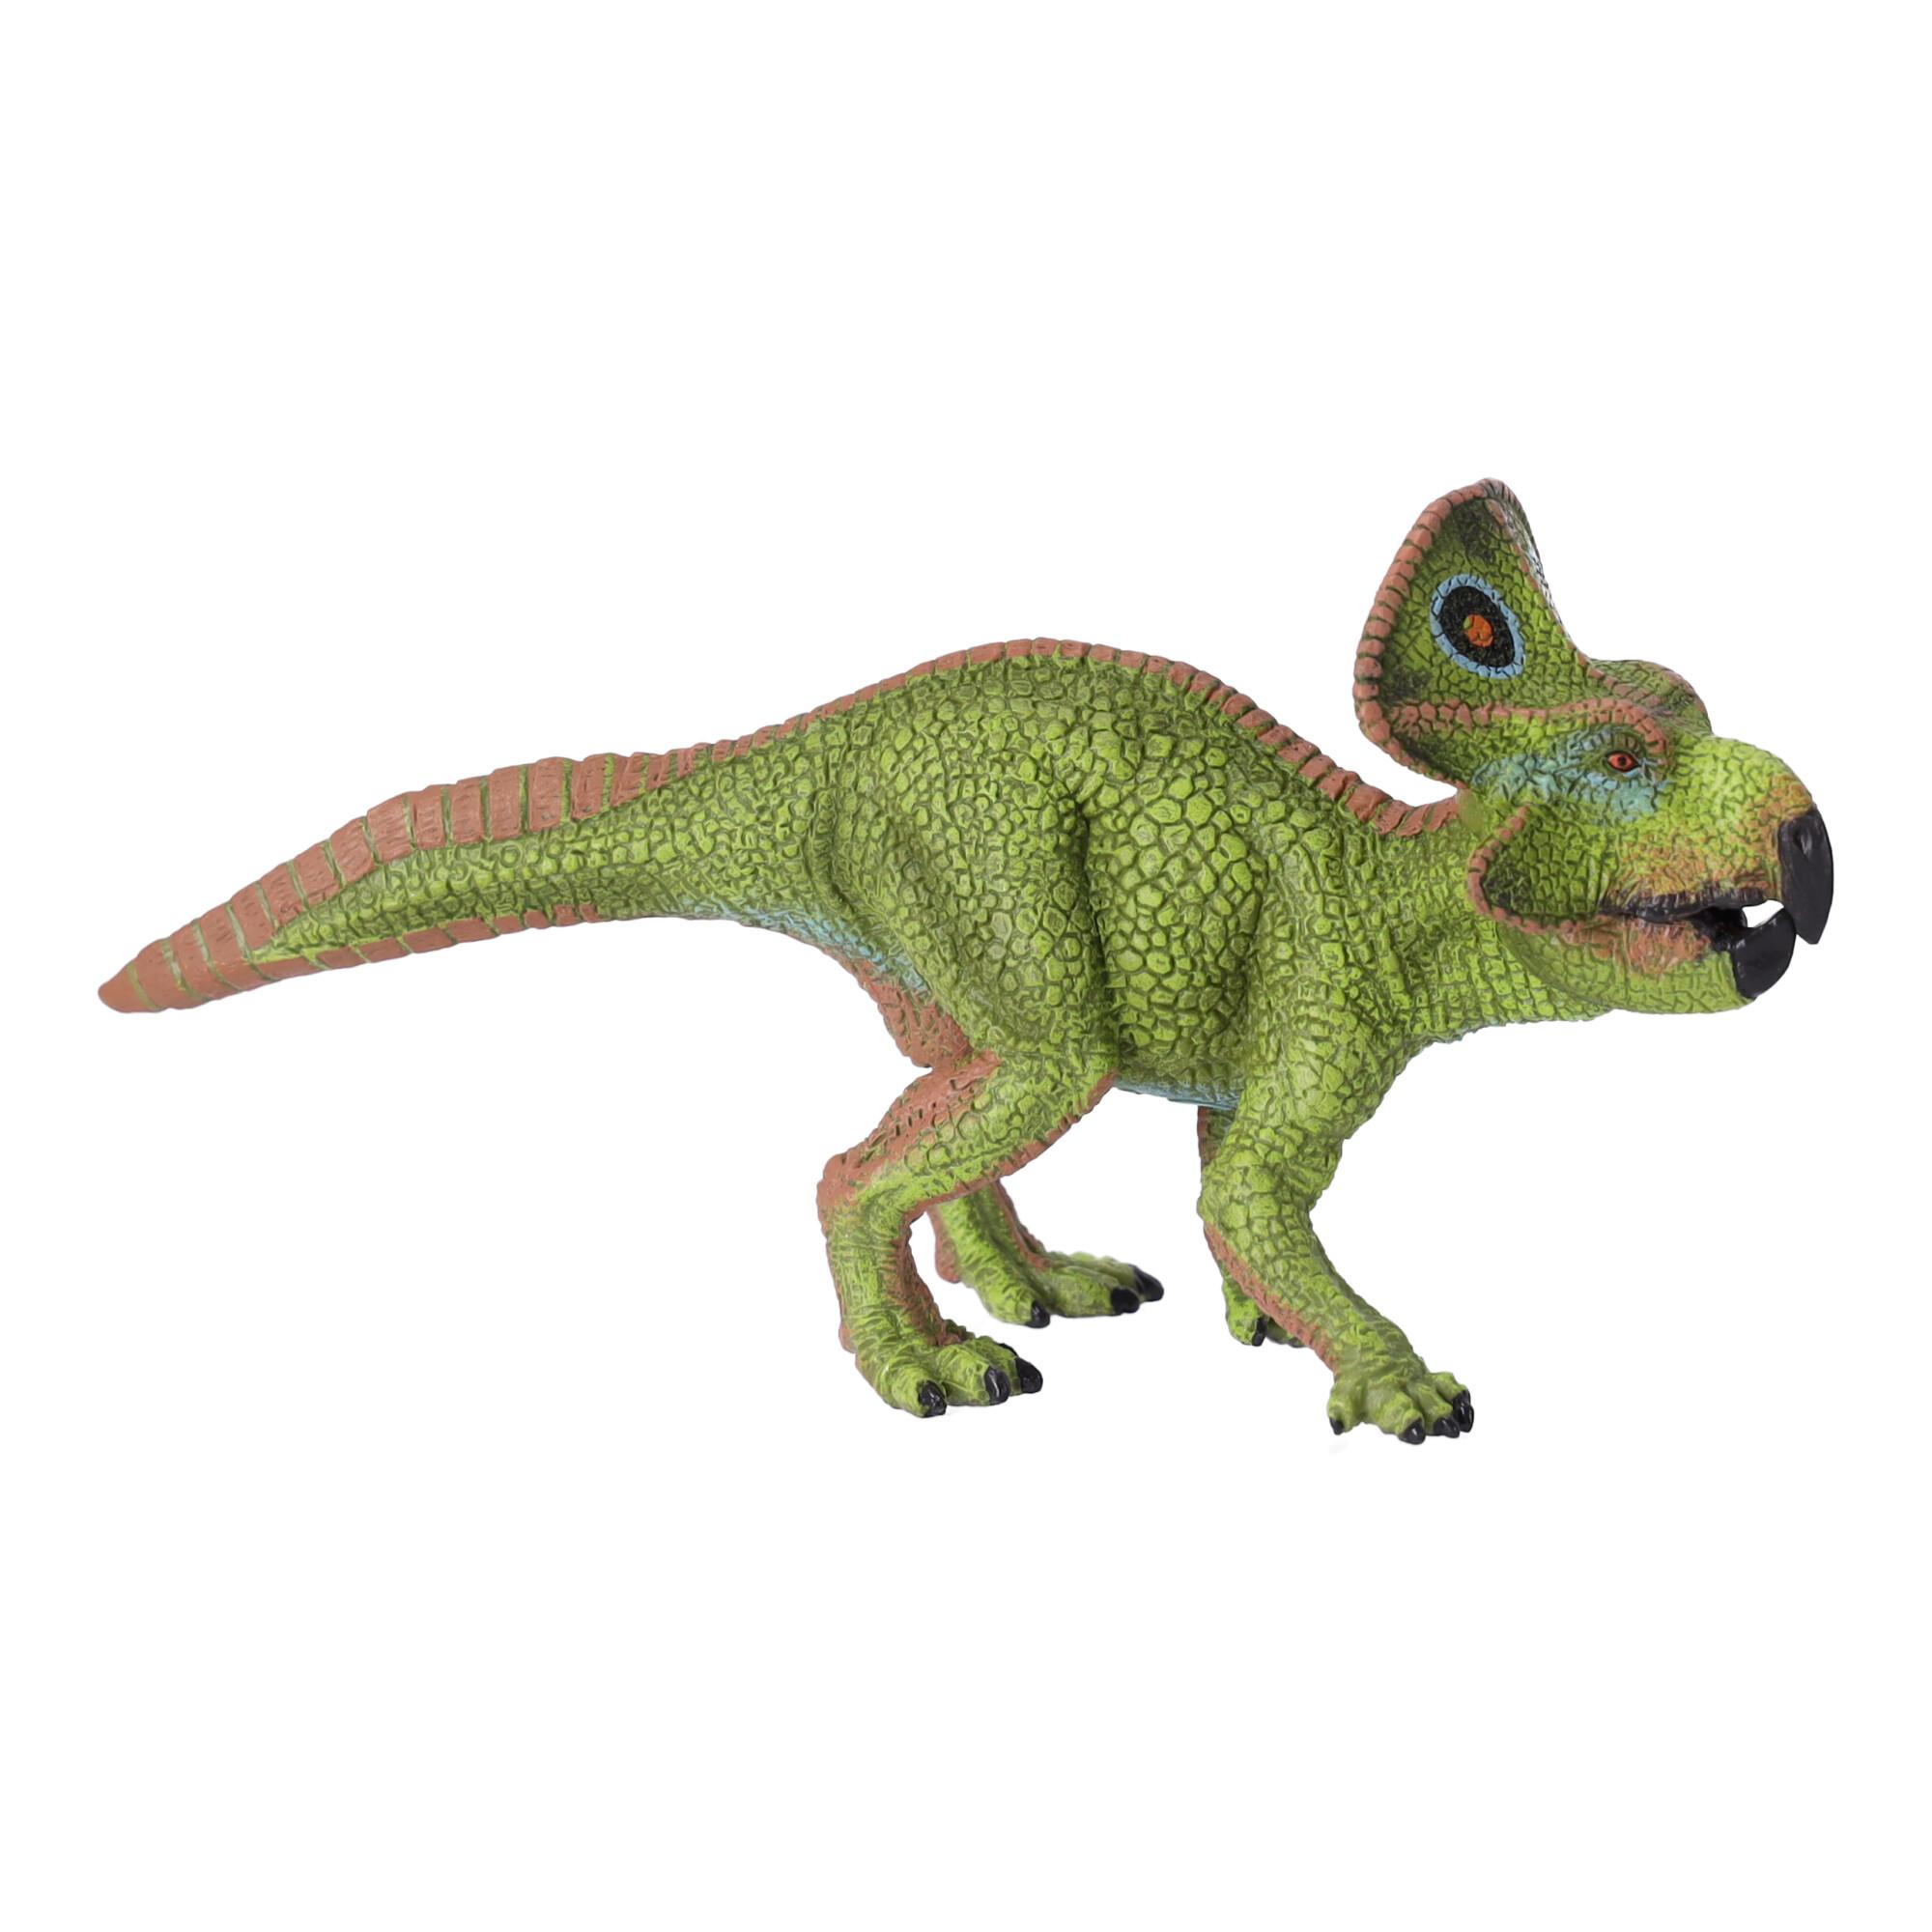 Collectible figurine Dinozaur Protoceratops, Papo